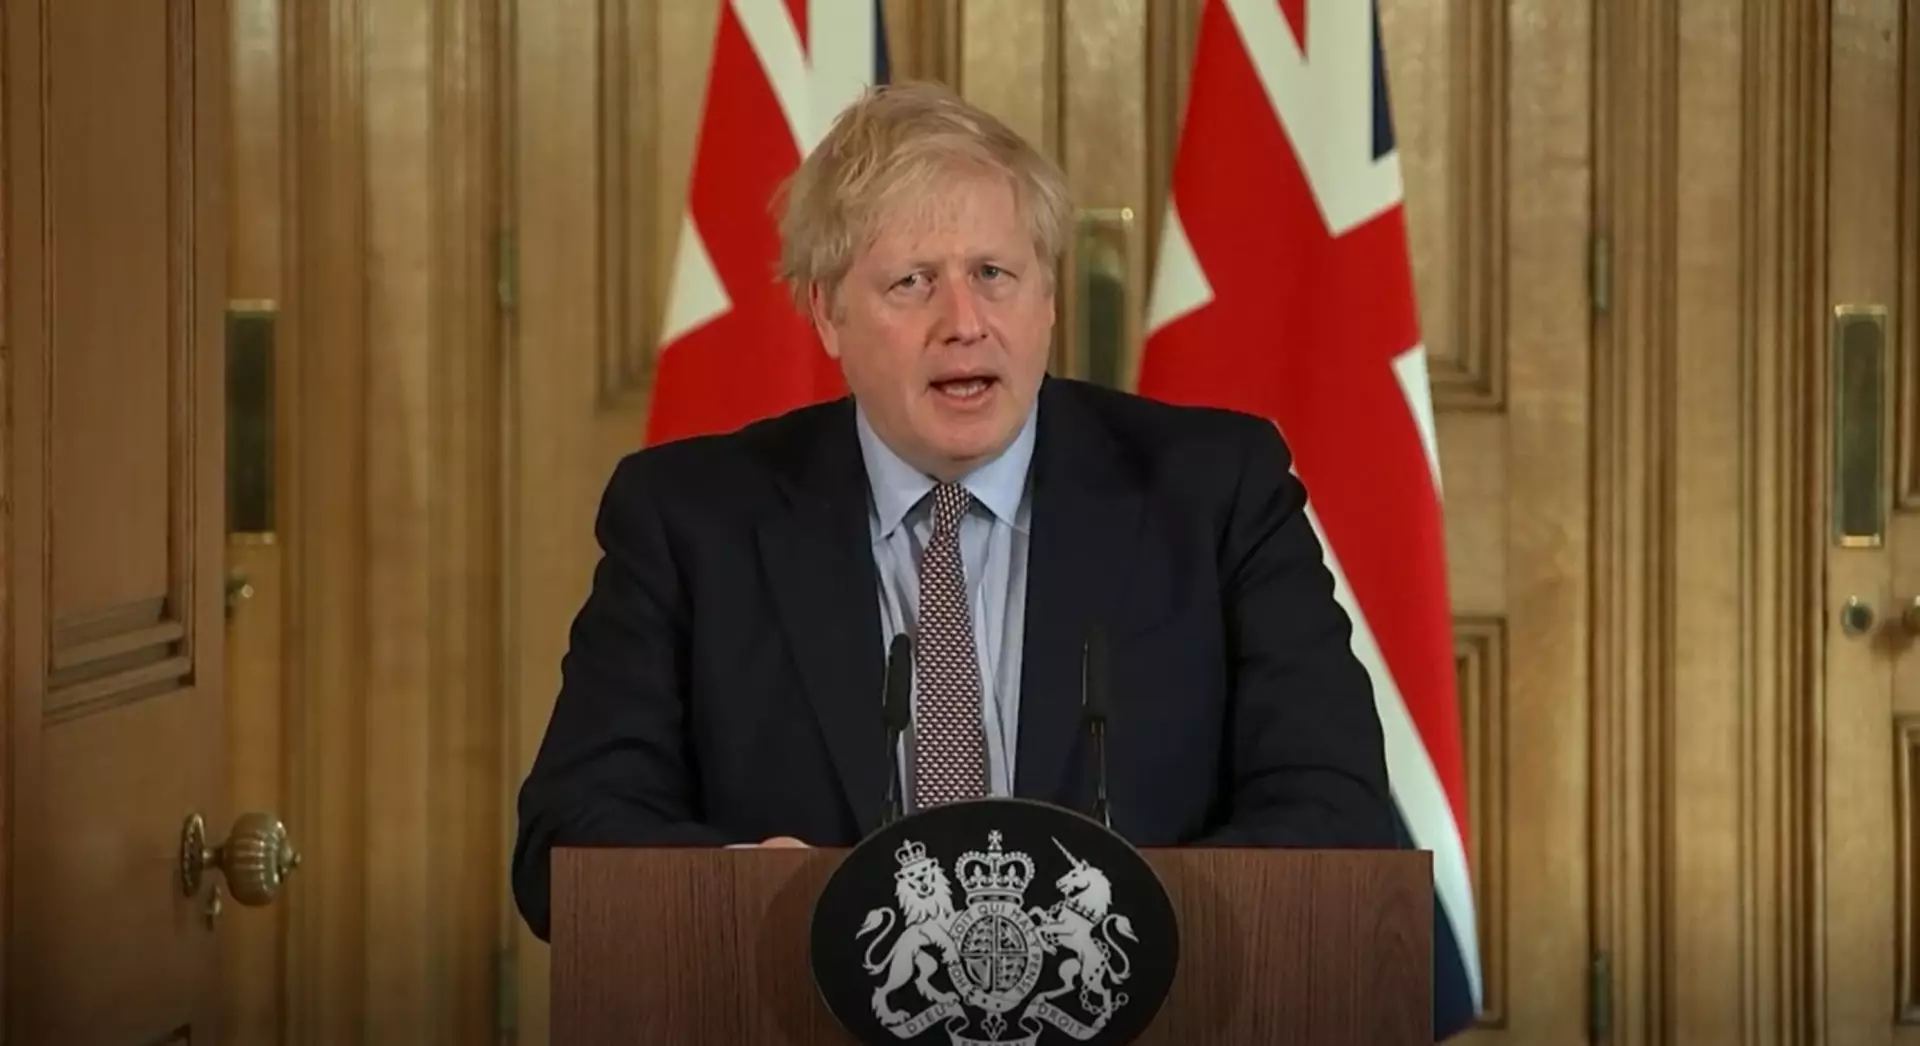 Boris Johnson held a press conference on Tuesday (